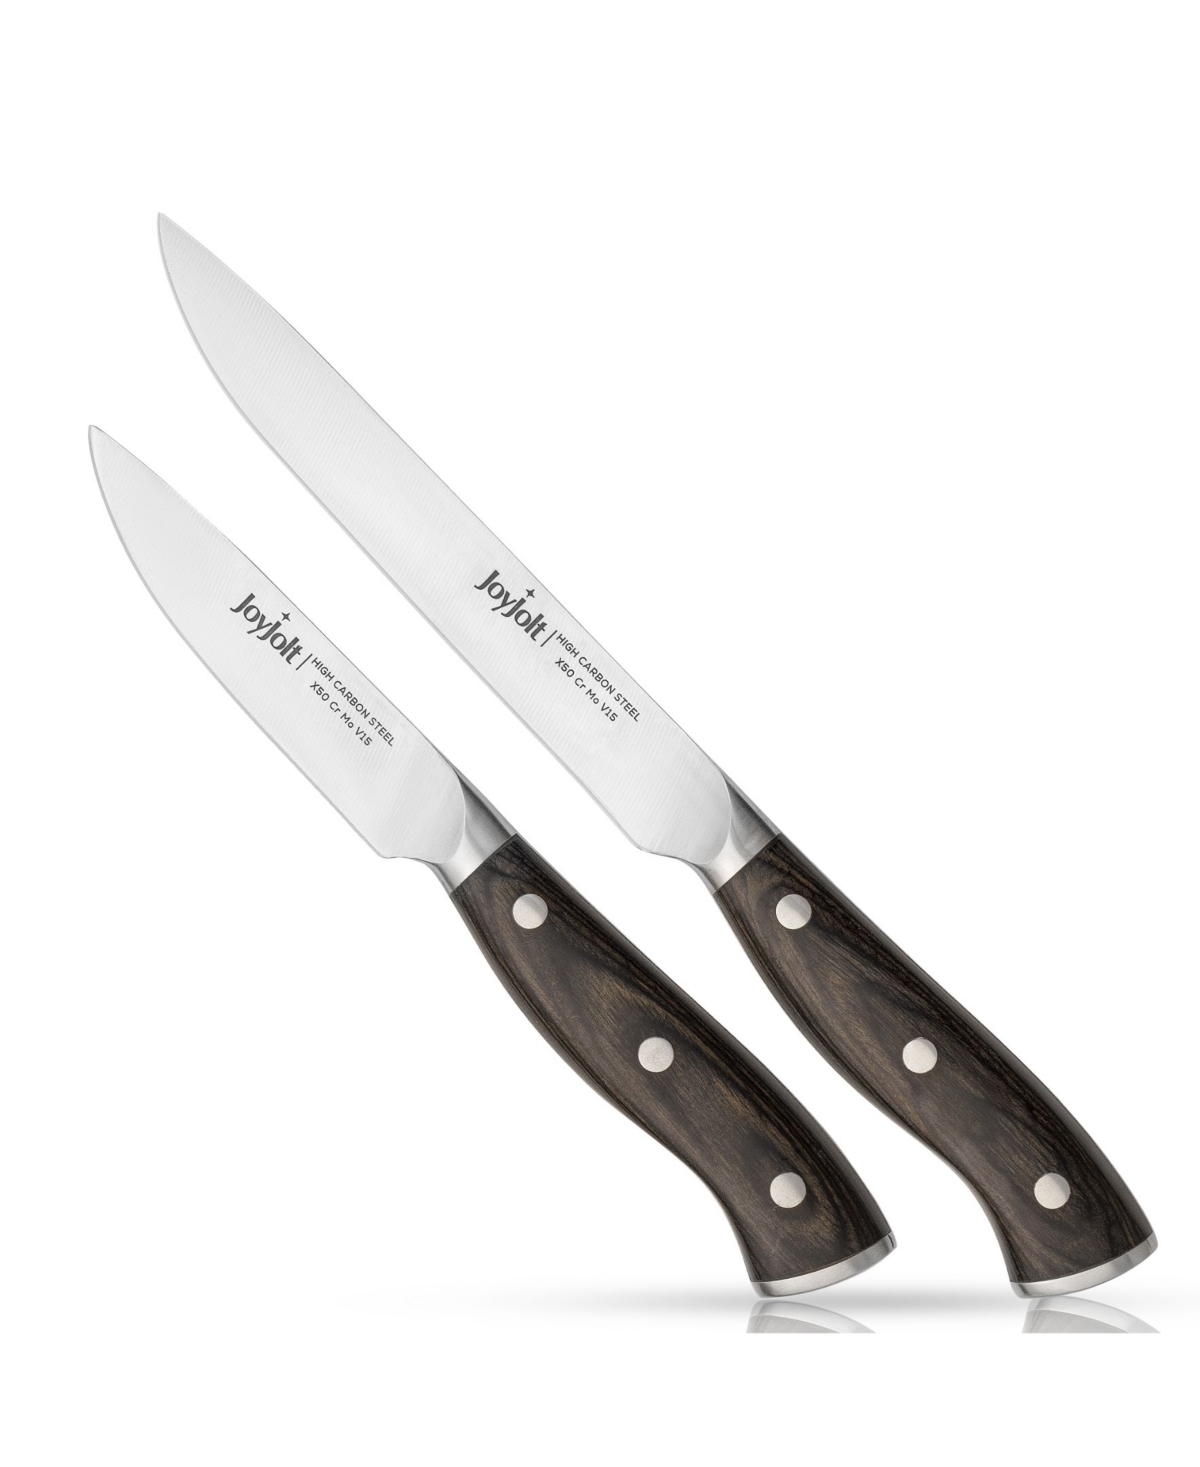 Shop Joyjolt 2 Piece Utility Knife High Carbon Steel Kitchen Knife Set In Silver